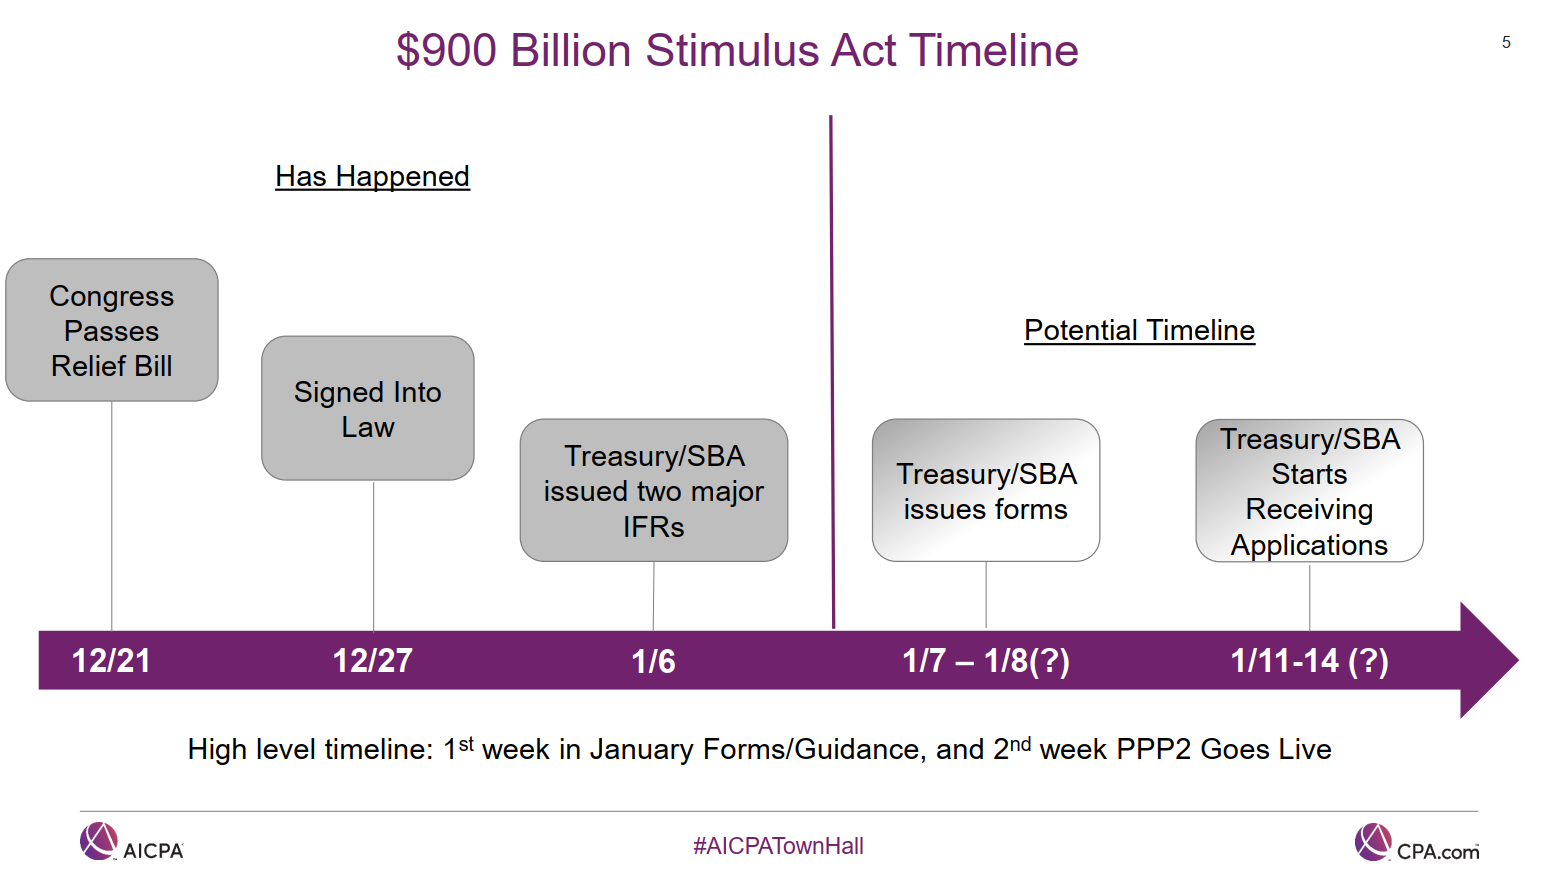 AICPA Stimulus Act Timeline